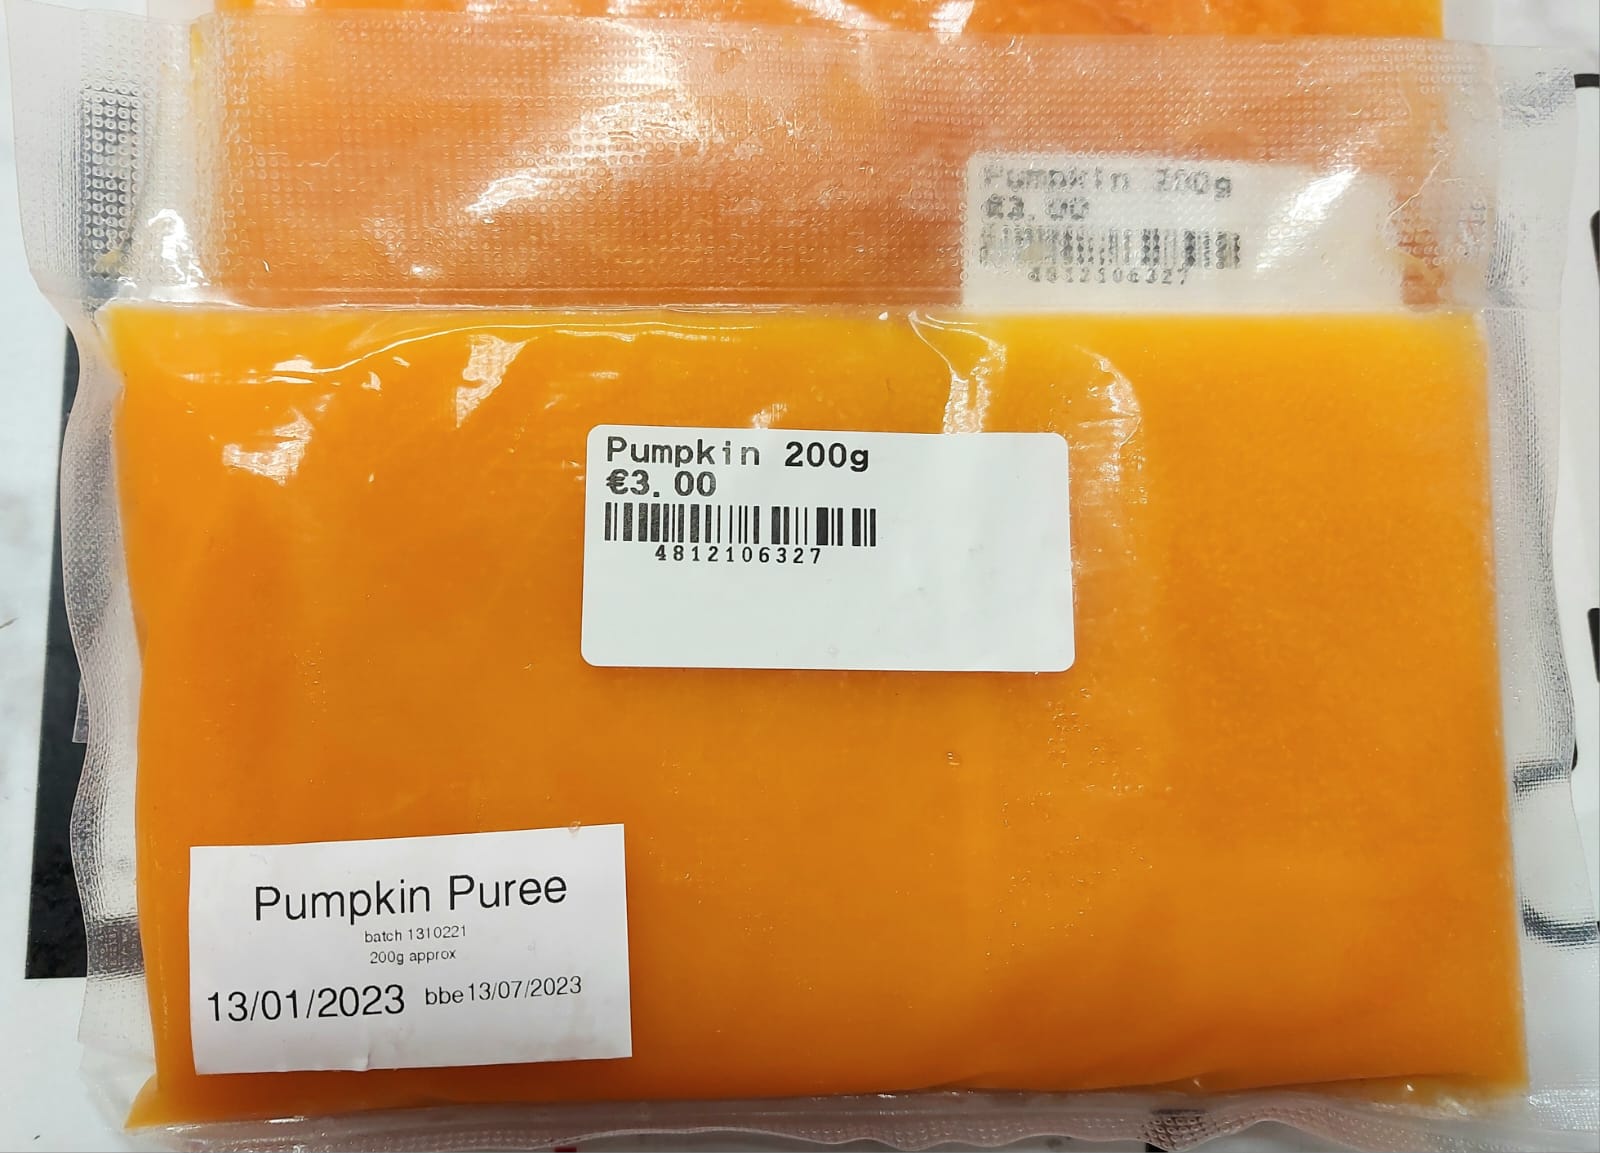 Pumpkin Puree 200g